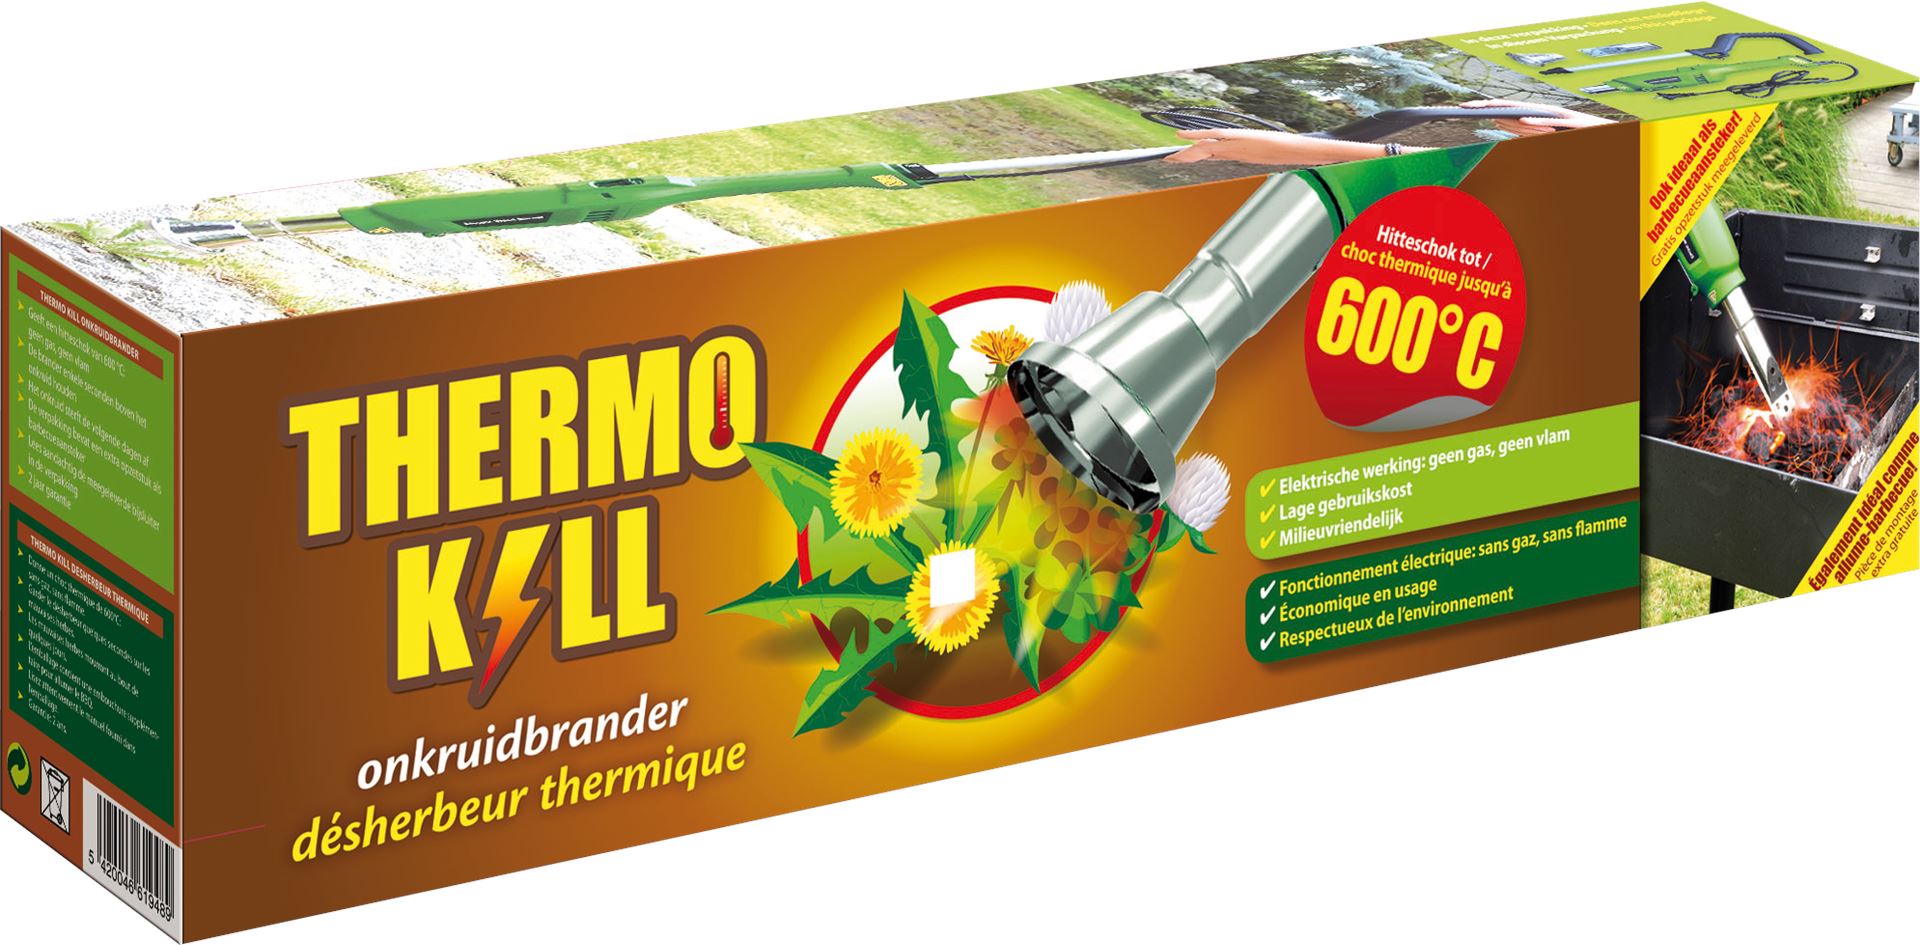 Thermo-Kill-elektrische-onkruidbrander-2000W-600-